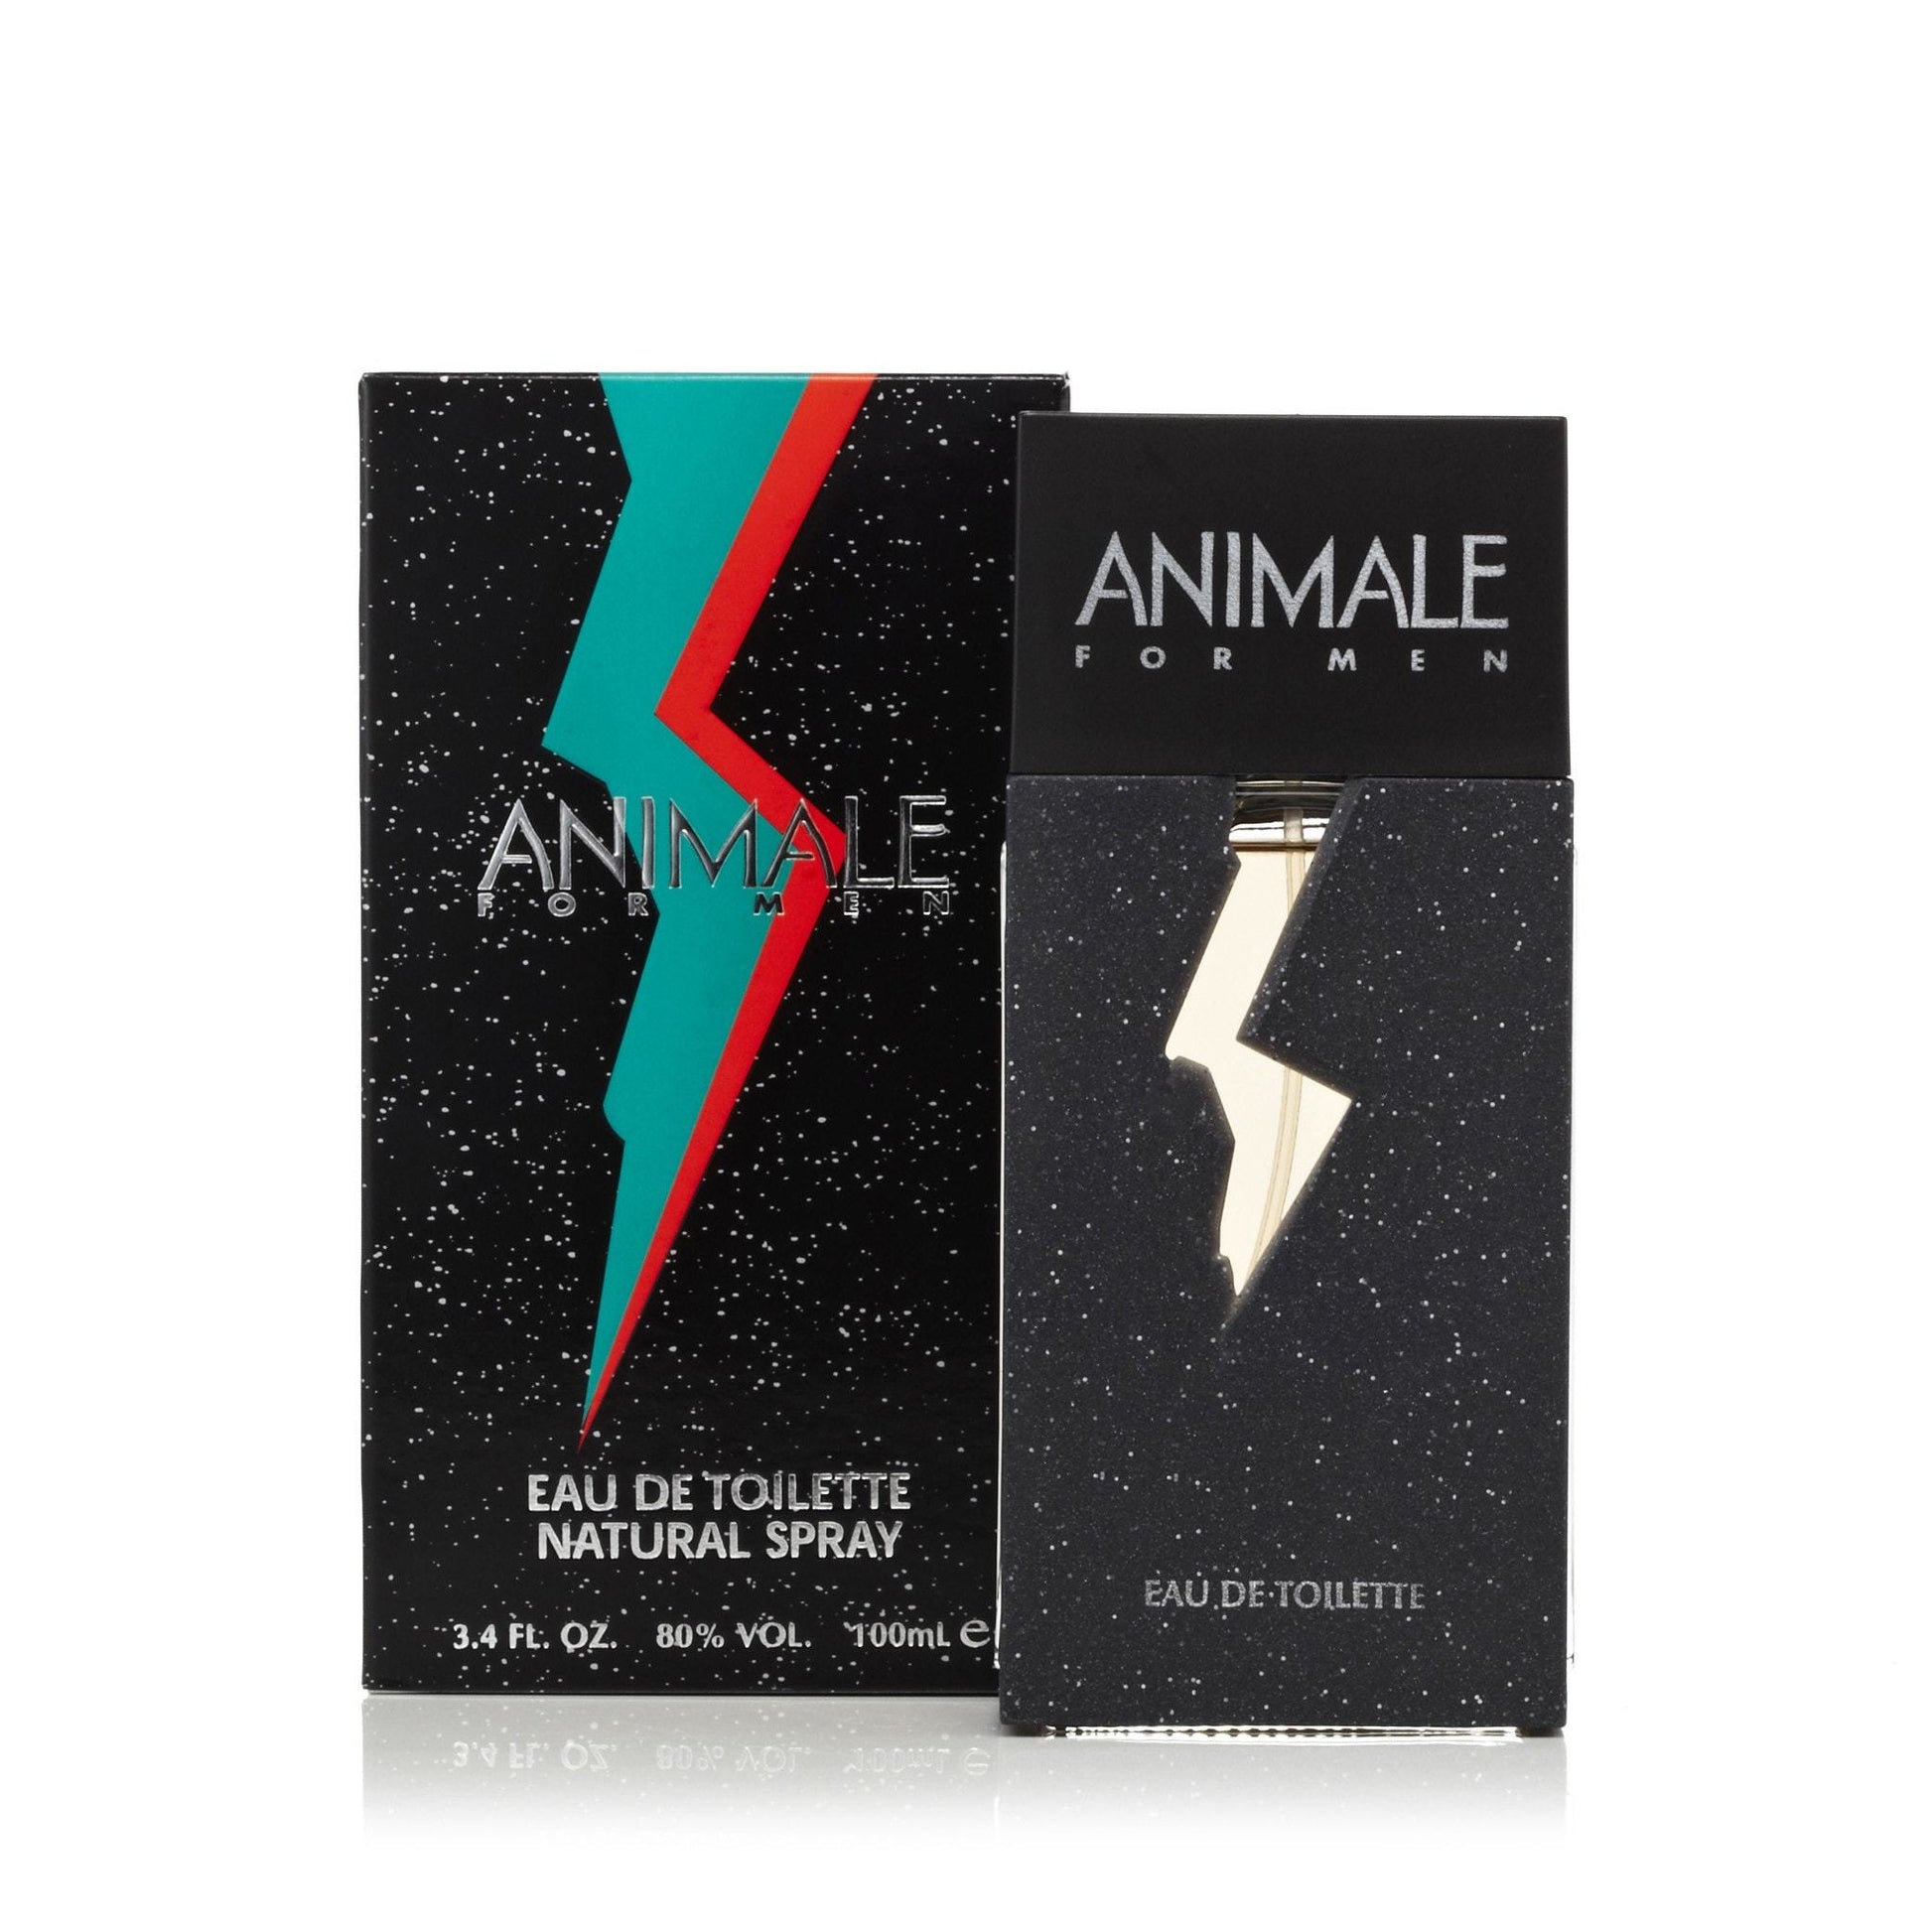 Animale Eau de Toilette Spray for Men by Animale, Product image 2